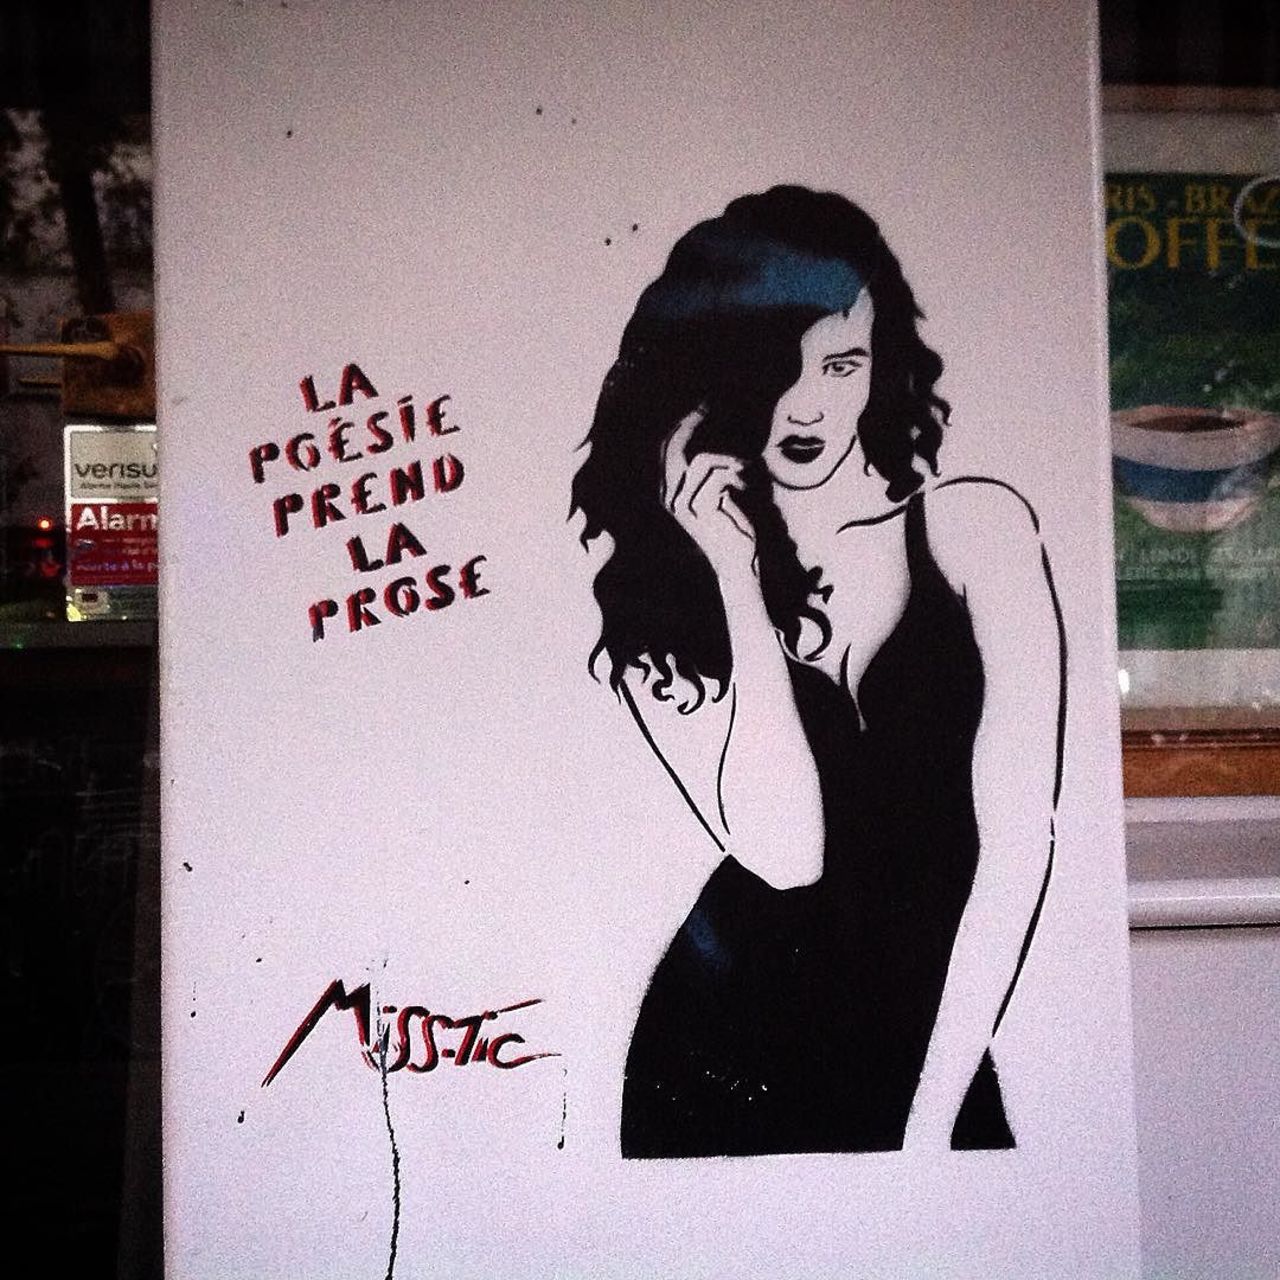 #Paris #graffiti photo by @stefetlinda http://ift.tt/1GyIpYu #StreetArt https://t.co/wS0QaxckzQ